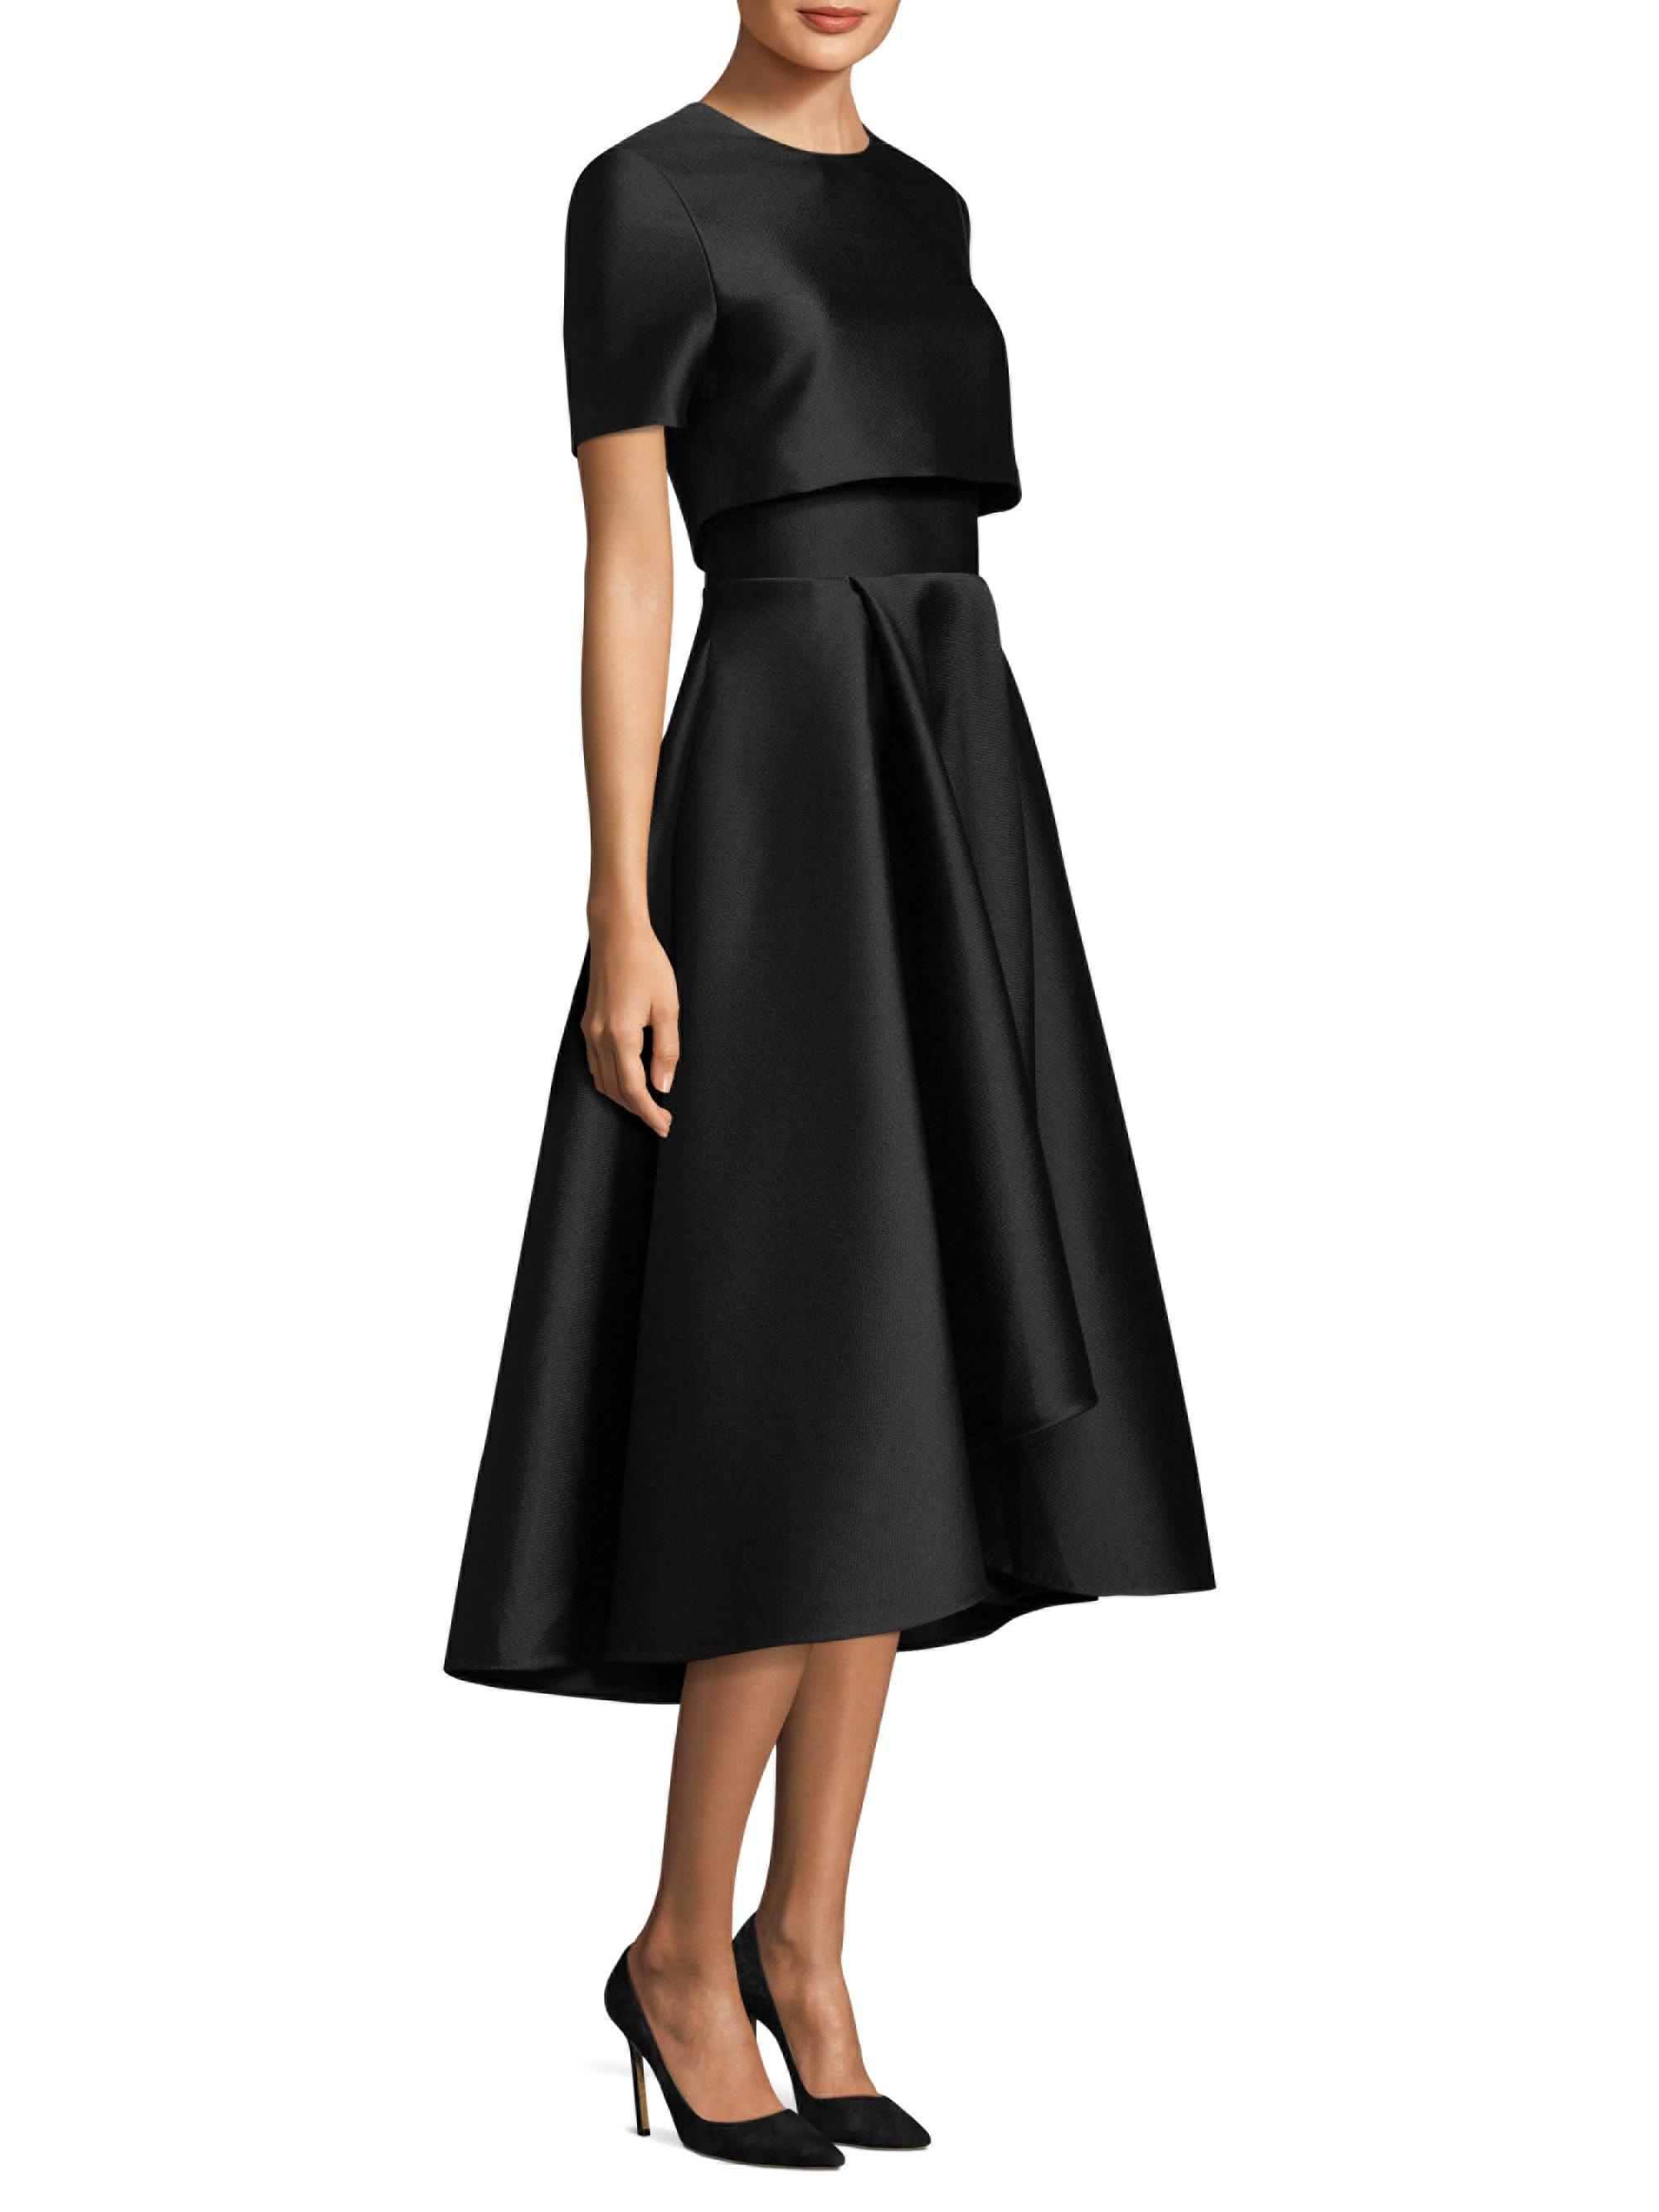 Jason Wu Synthetic Women's Popover Cocktail Dress - Black - Size 4 - Lyst